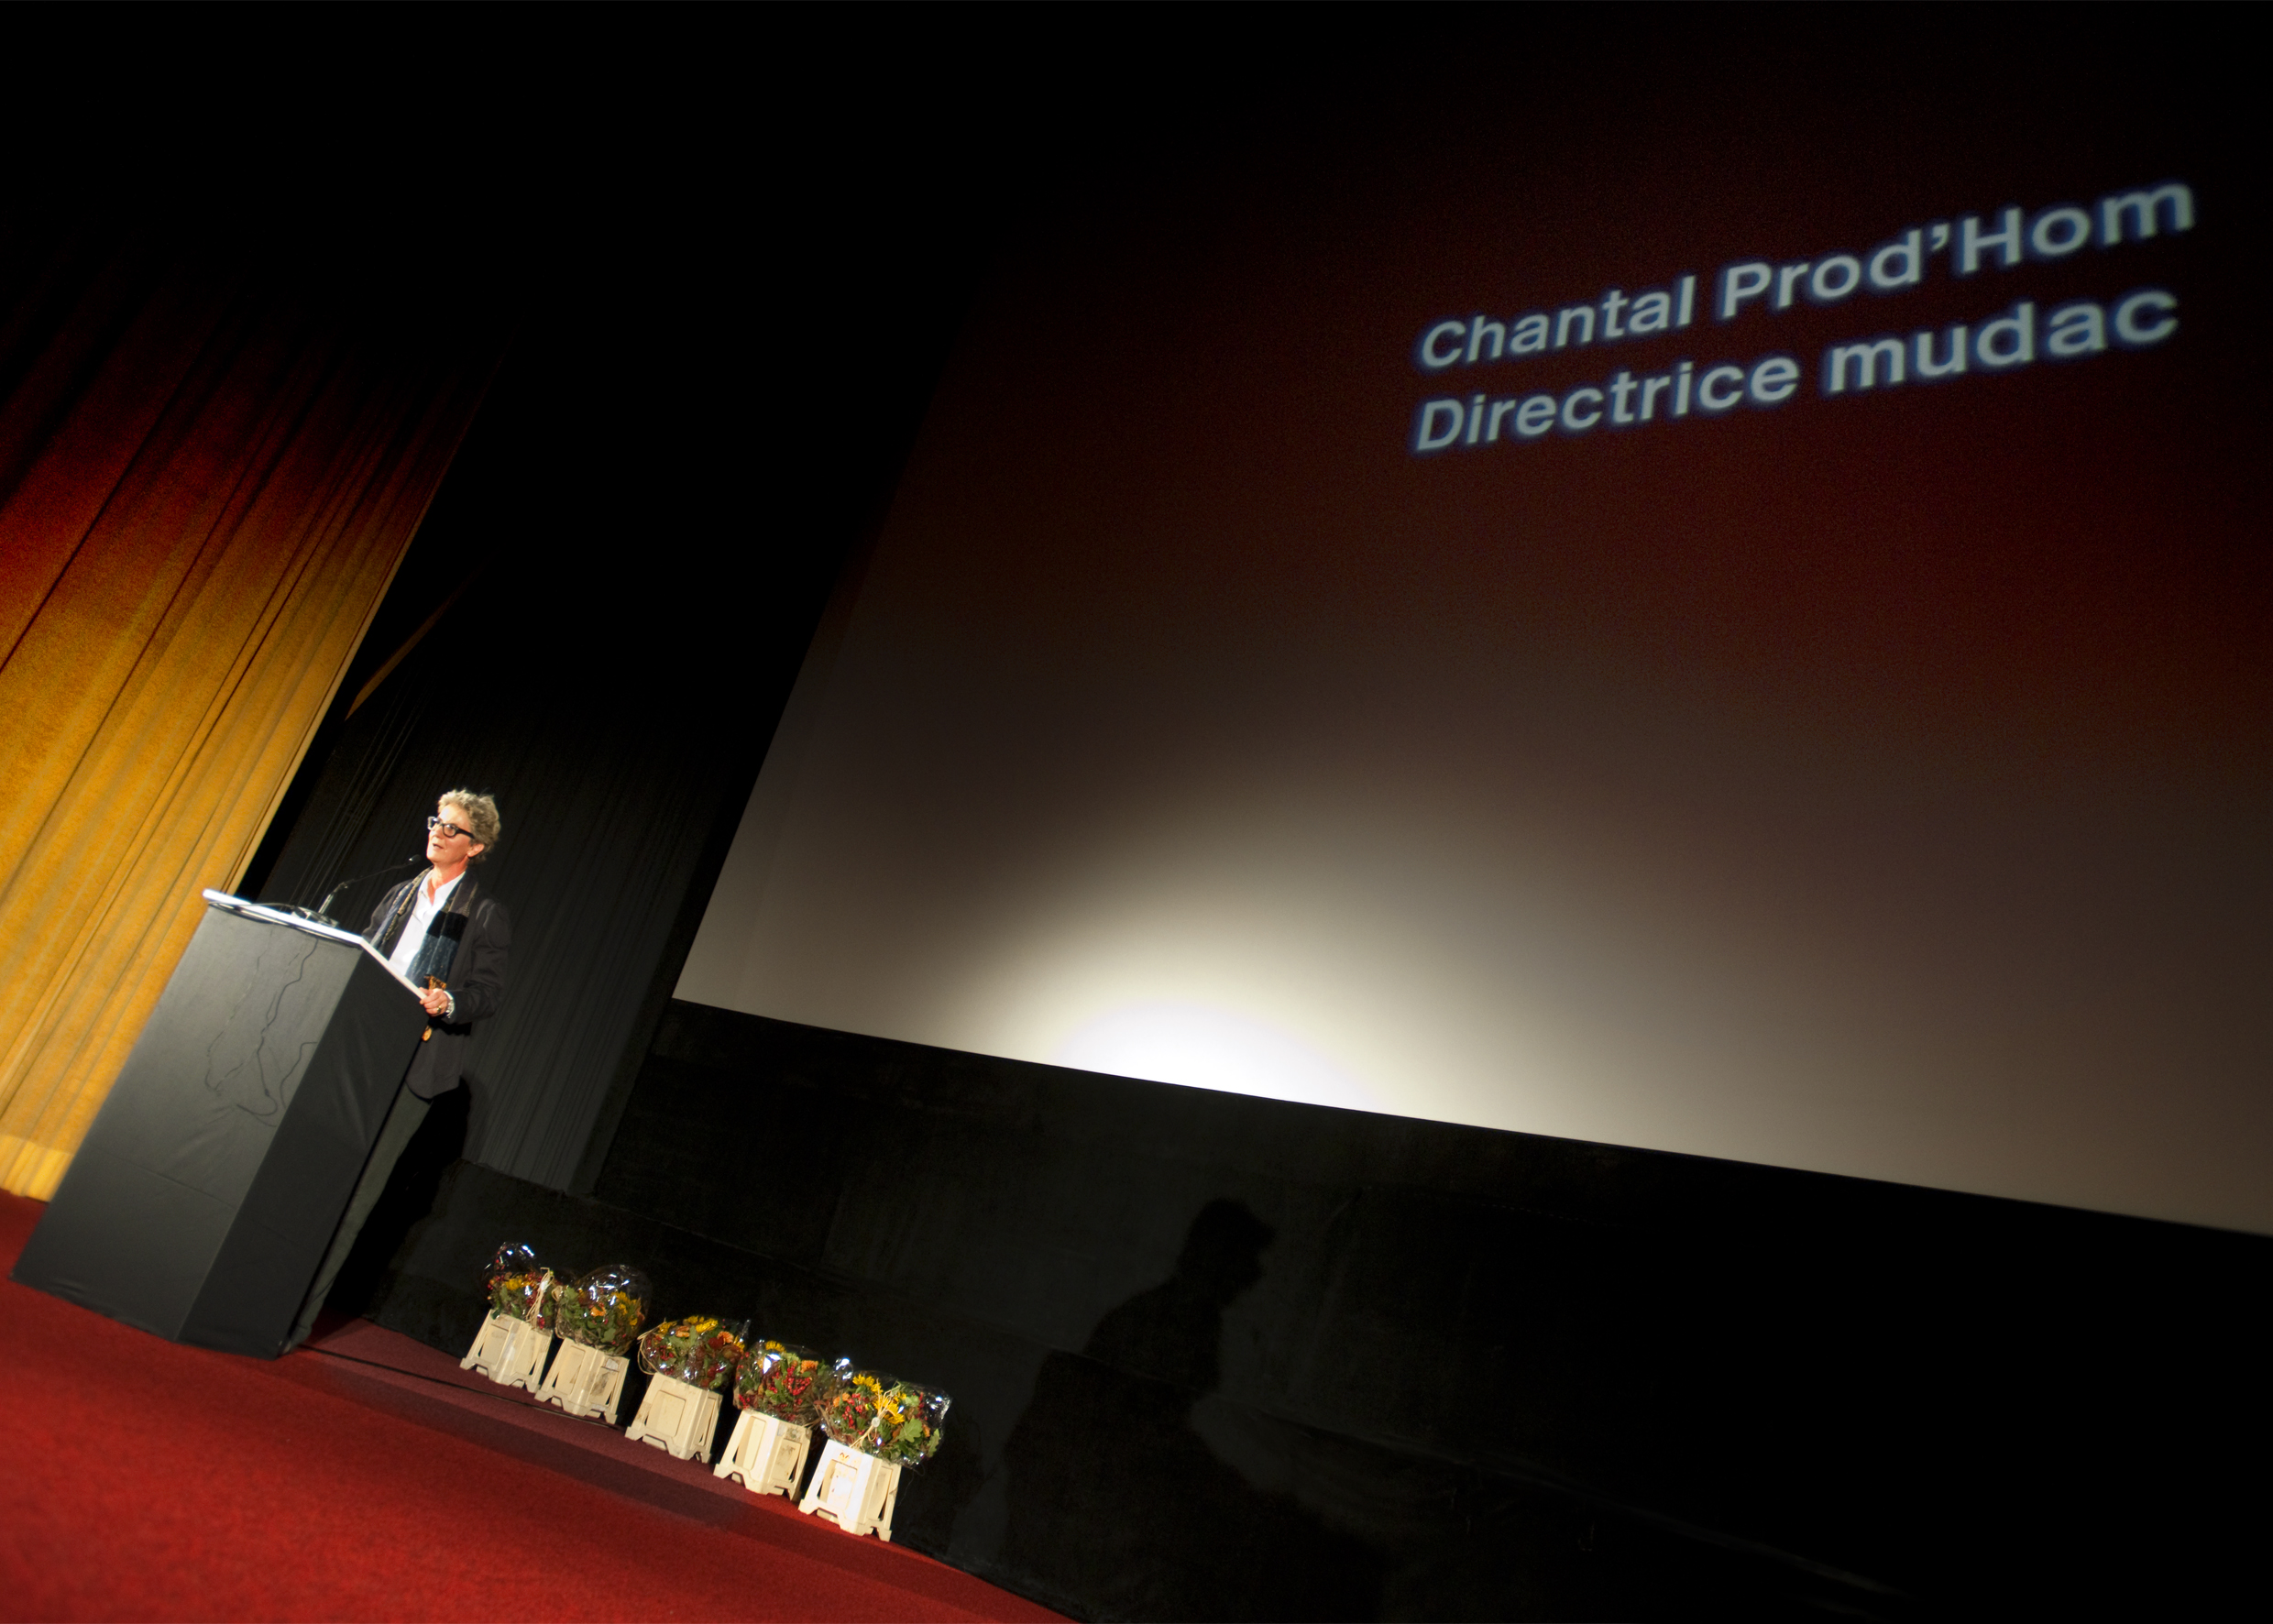 Preisverleihung im Cinéma Capitole Lausanne : Chantal Prod'hom